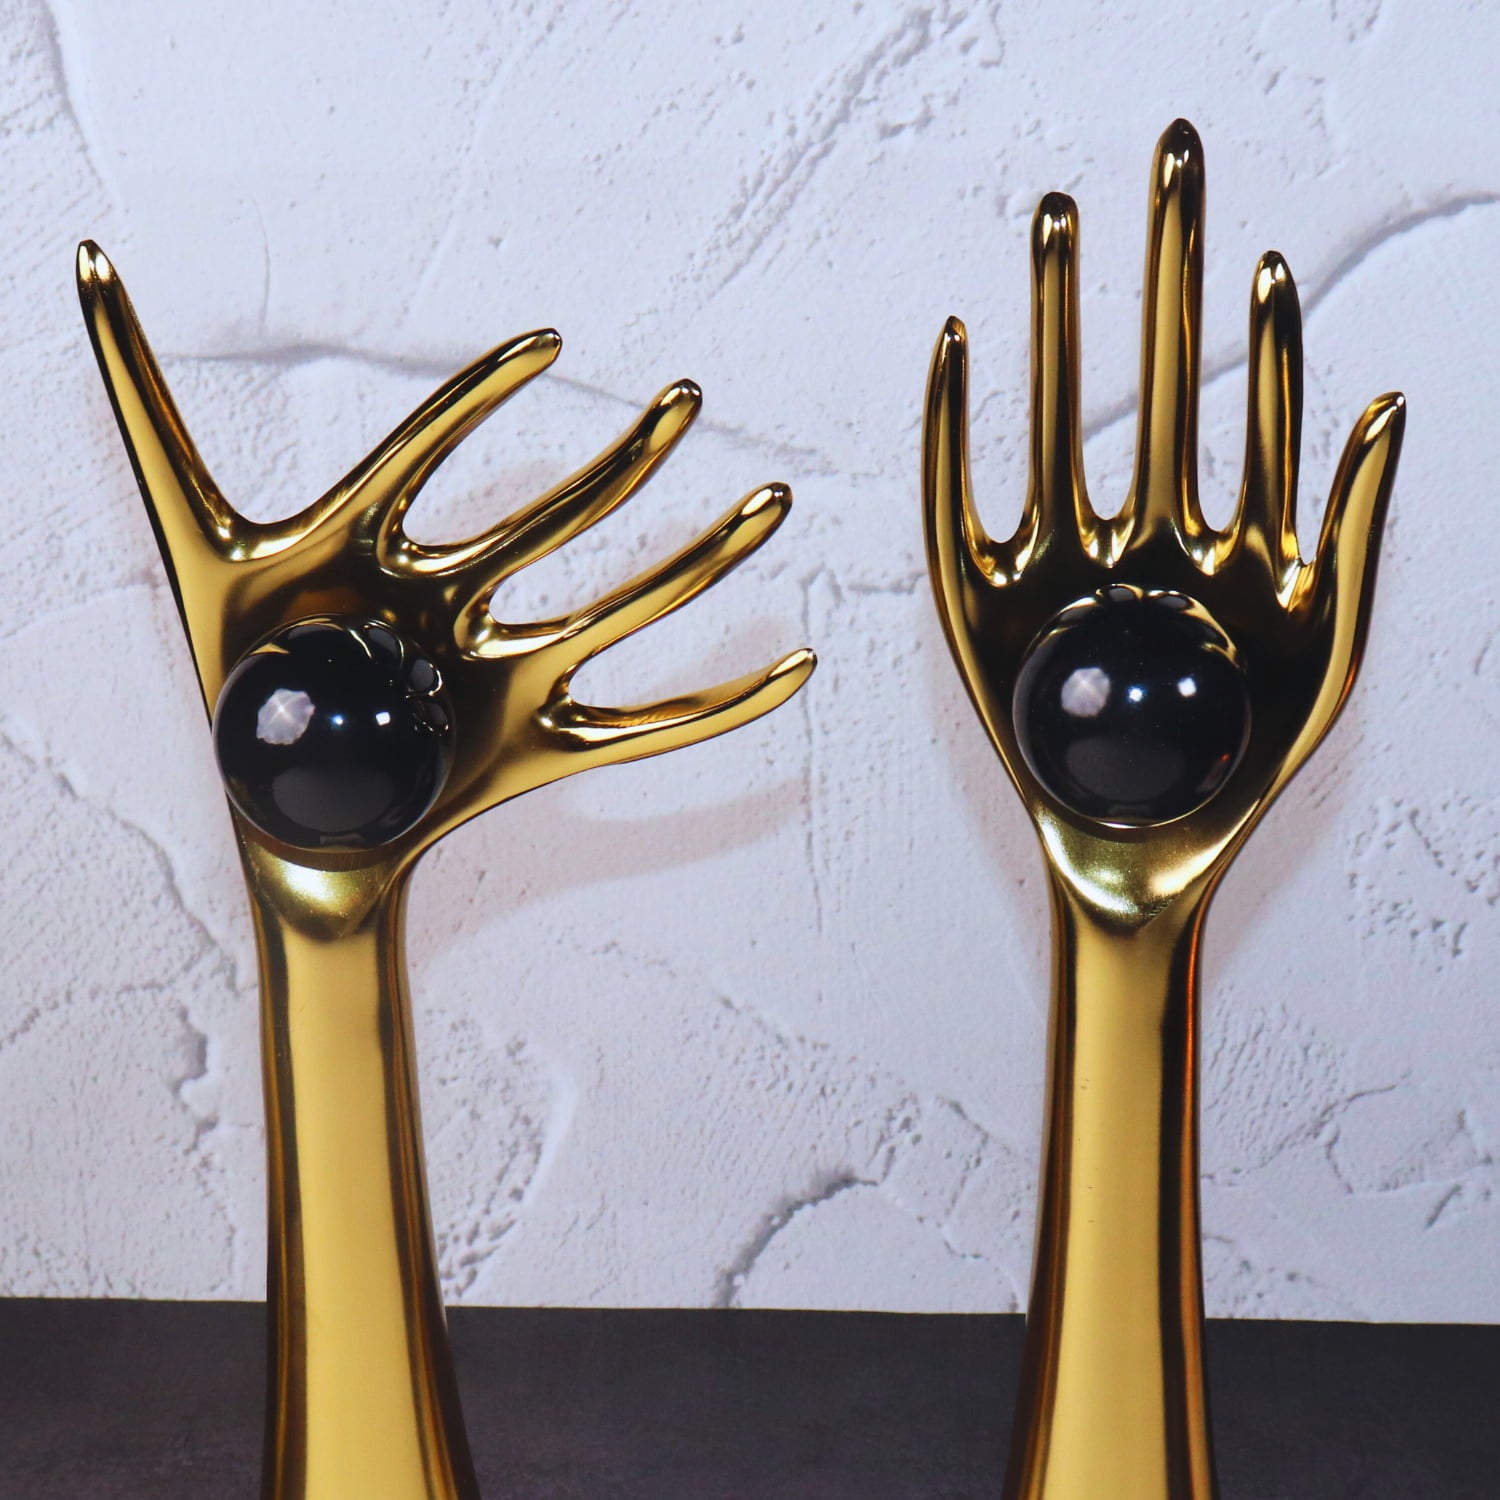 The Golden auspicious hands holding balls in aluminum set of 2